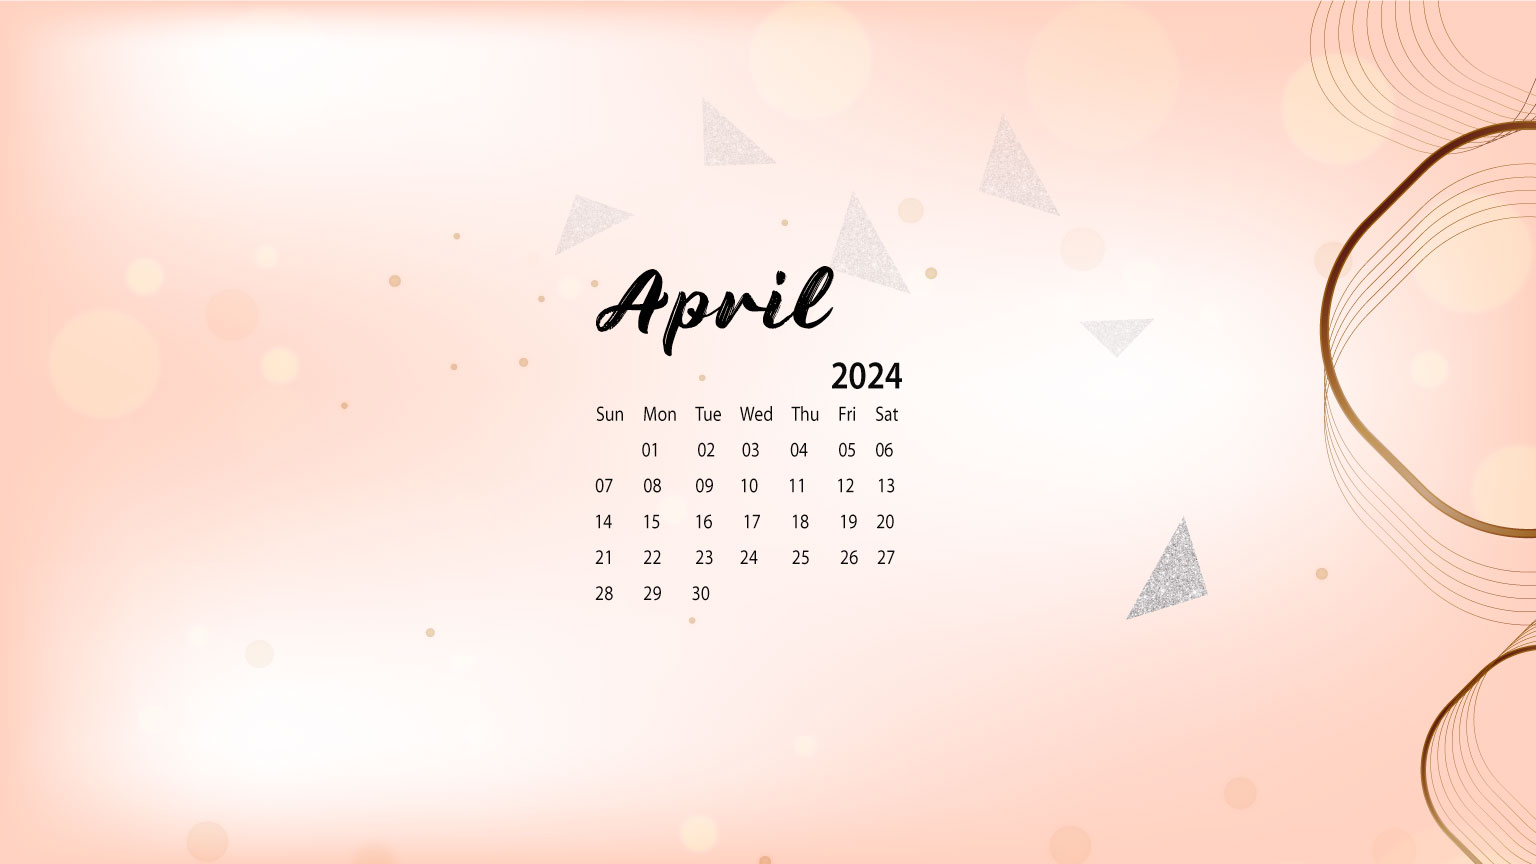 April 2024 Desktop Wallpaper Calendar - Calendarlabs with April Calendar Desktop Wallpaper 2024